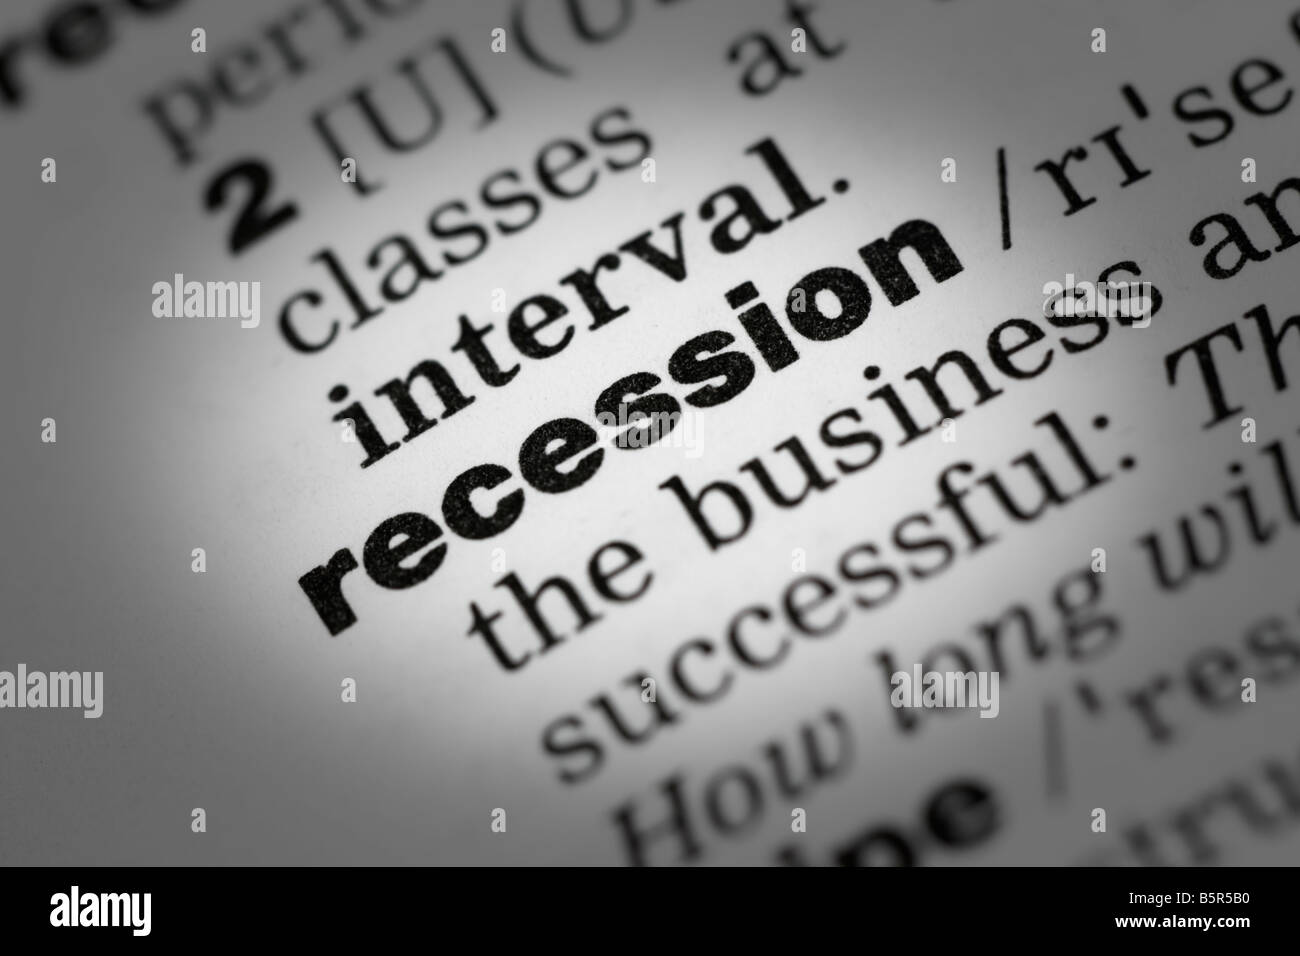 recession definition Stock Photo